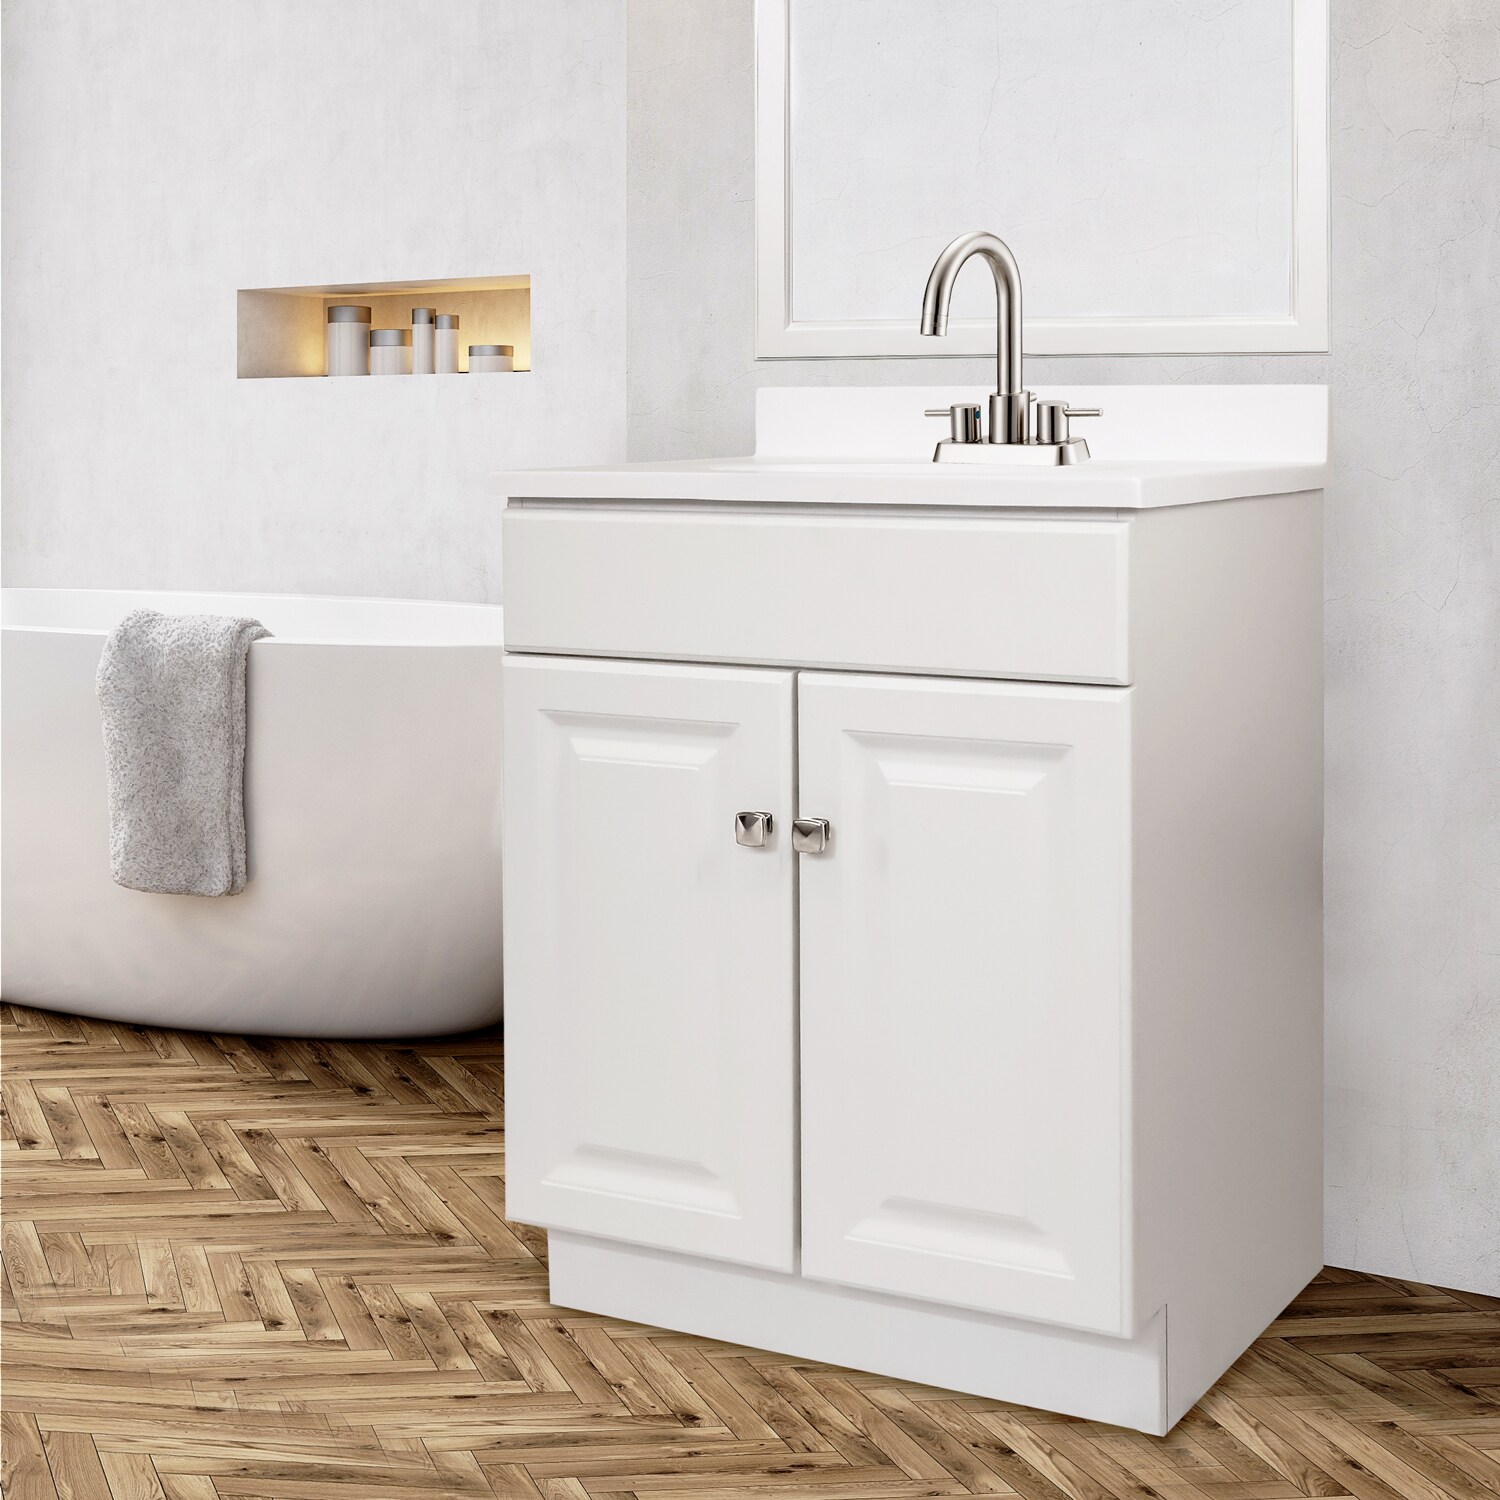 Design House Eastport Satin Nickel 2-handle 4-in centerset WaterSense Mid-arc Bathroom Sink Faucet